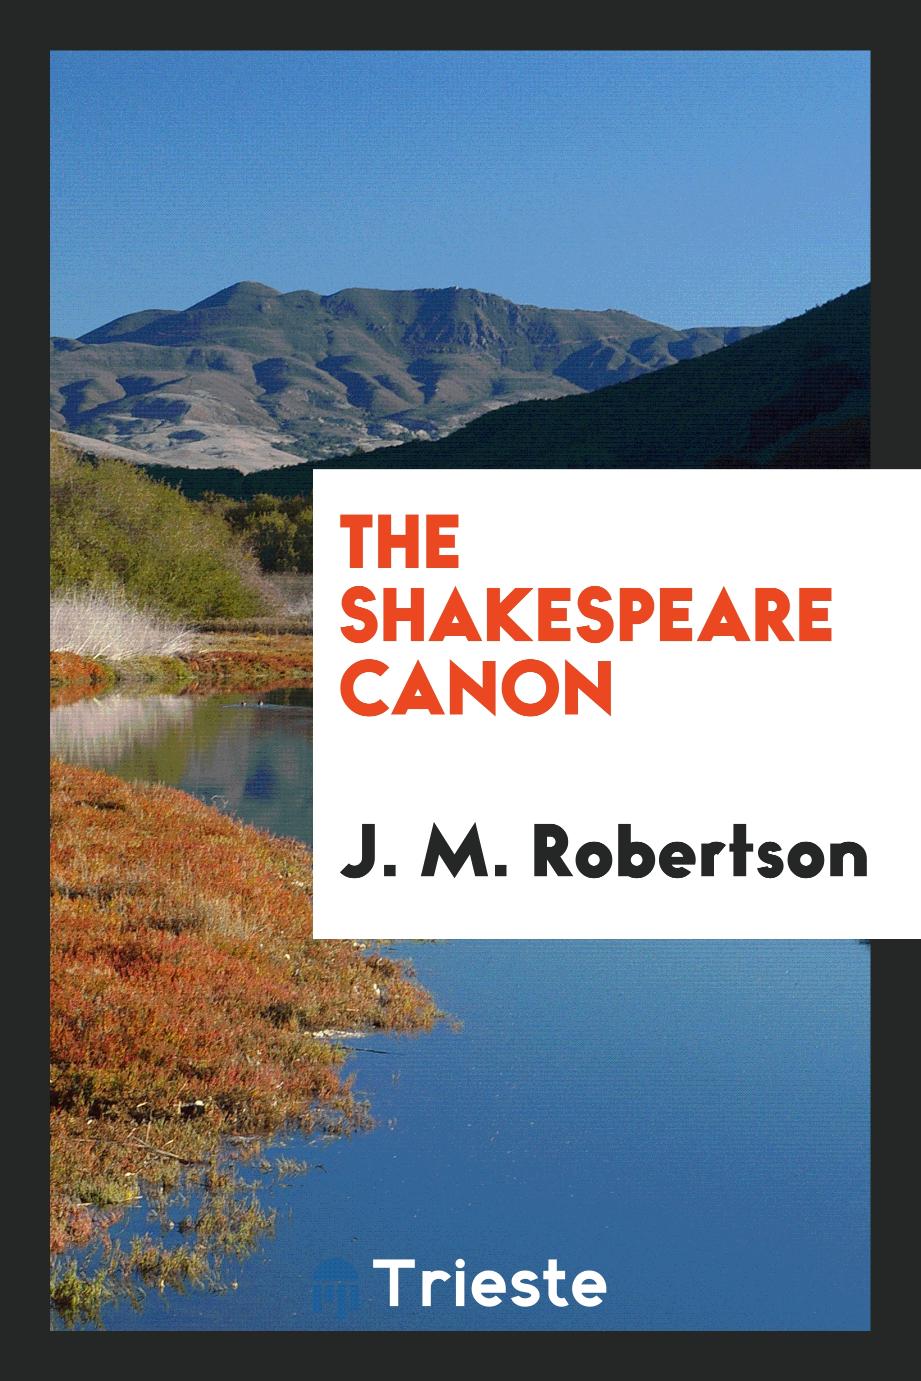 The Shakespeare canon